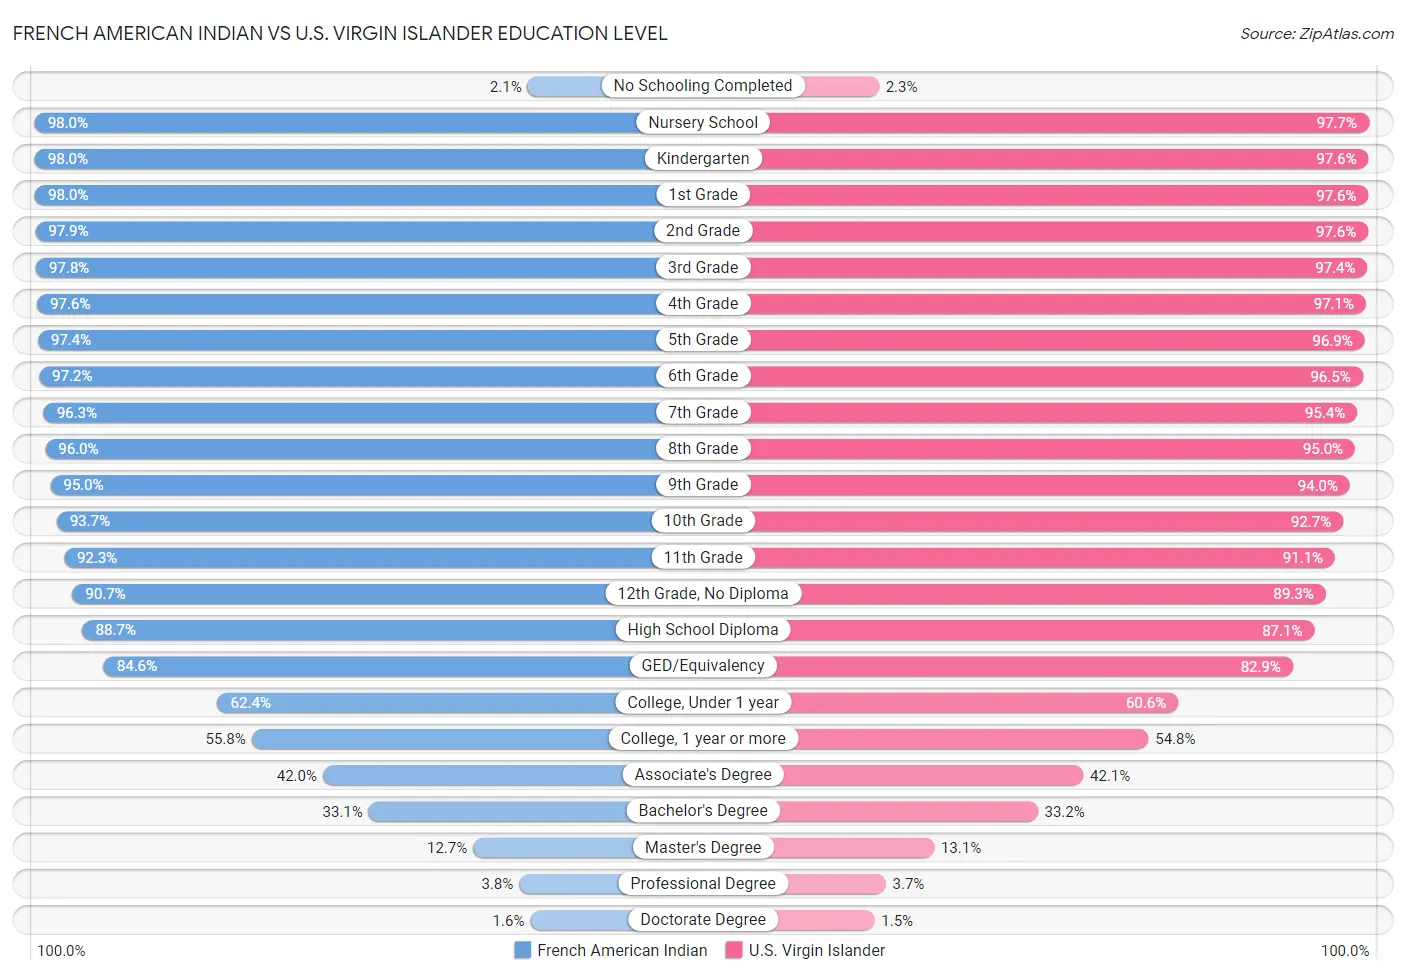 French American Indian vs U.S. Virgin Islander Education Level